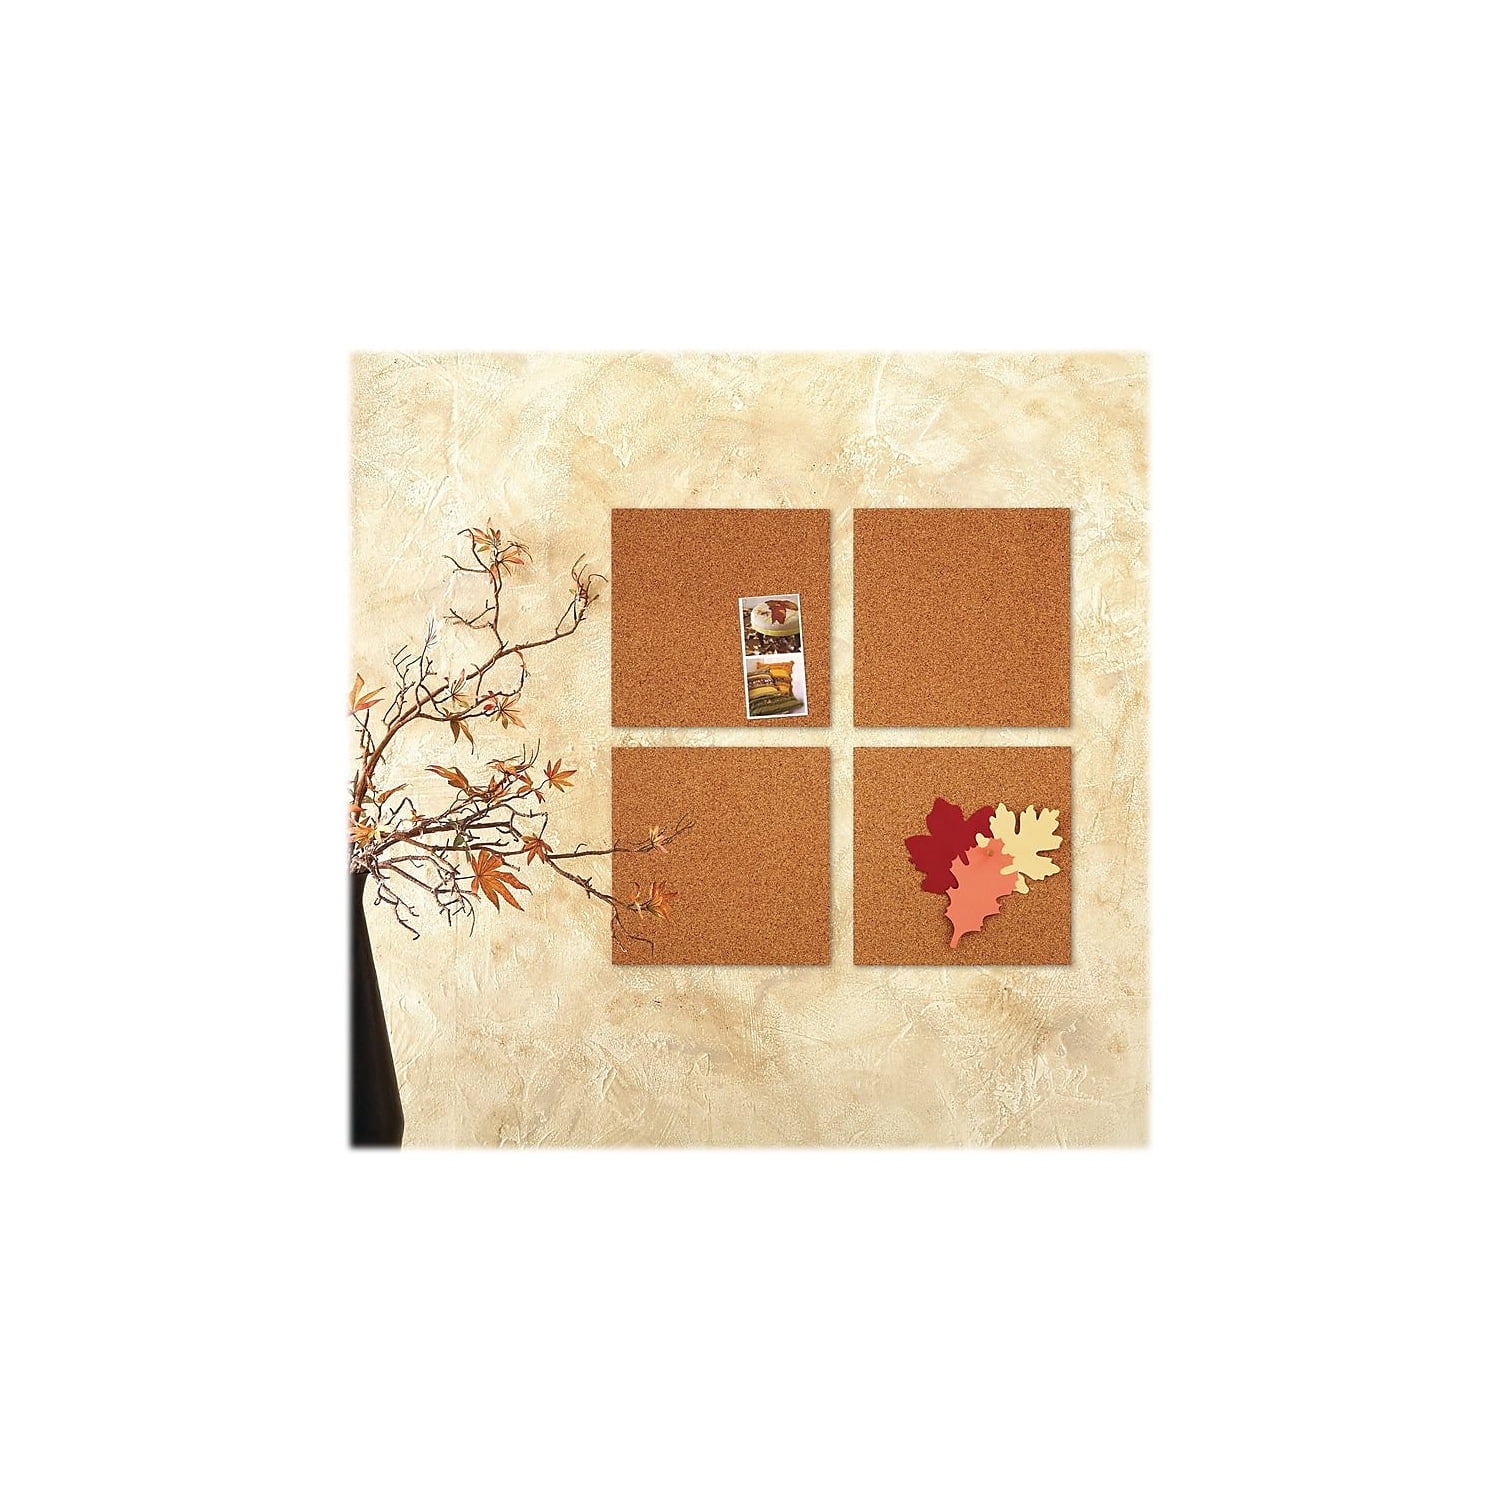  Quartet Cork Tiles, Corkboard, 12 x 12, Cork Board,  Frameless, Natural, 4 Pack (102) : Office Products